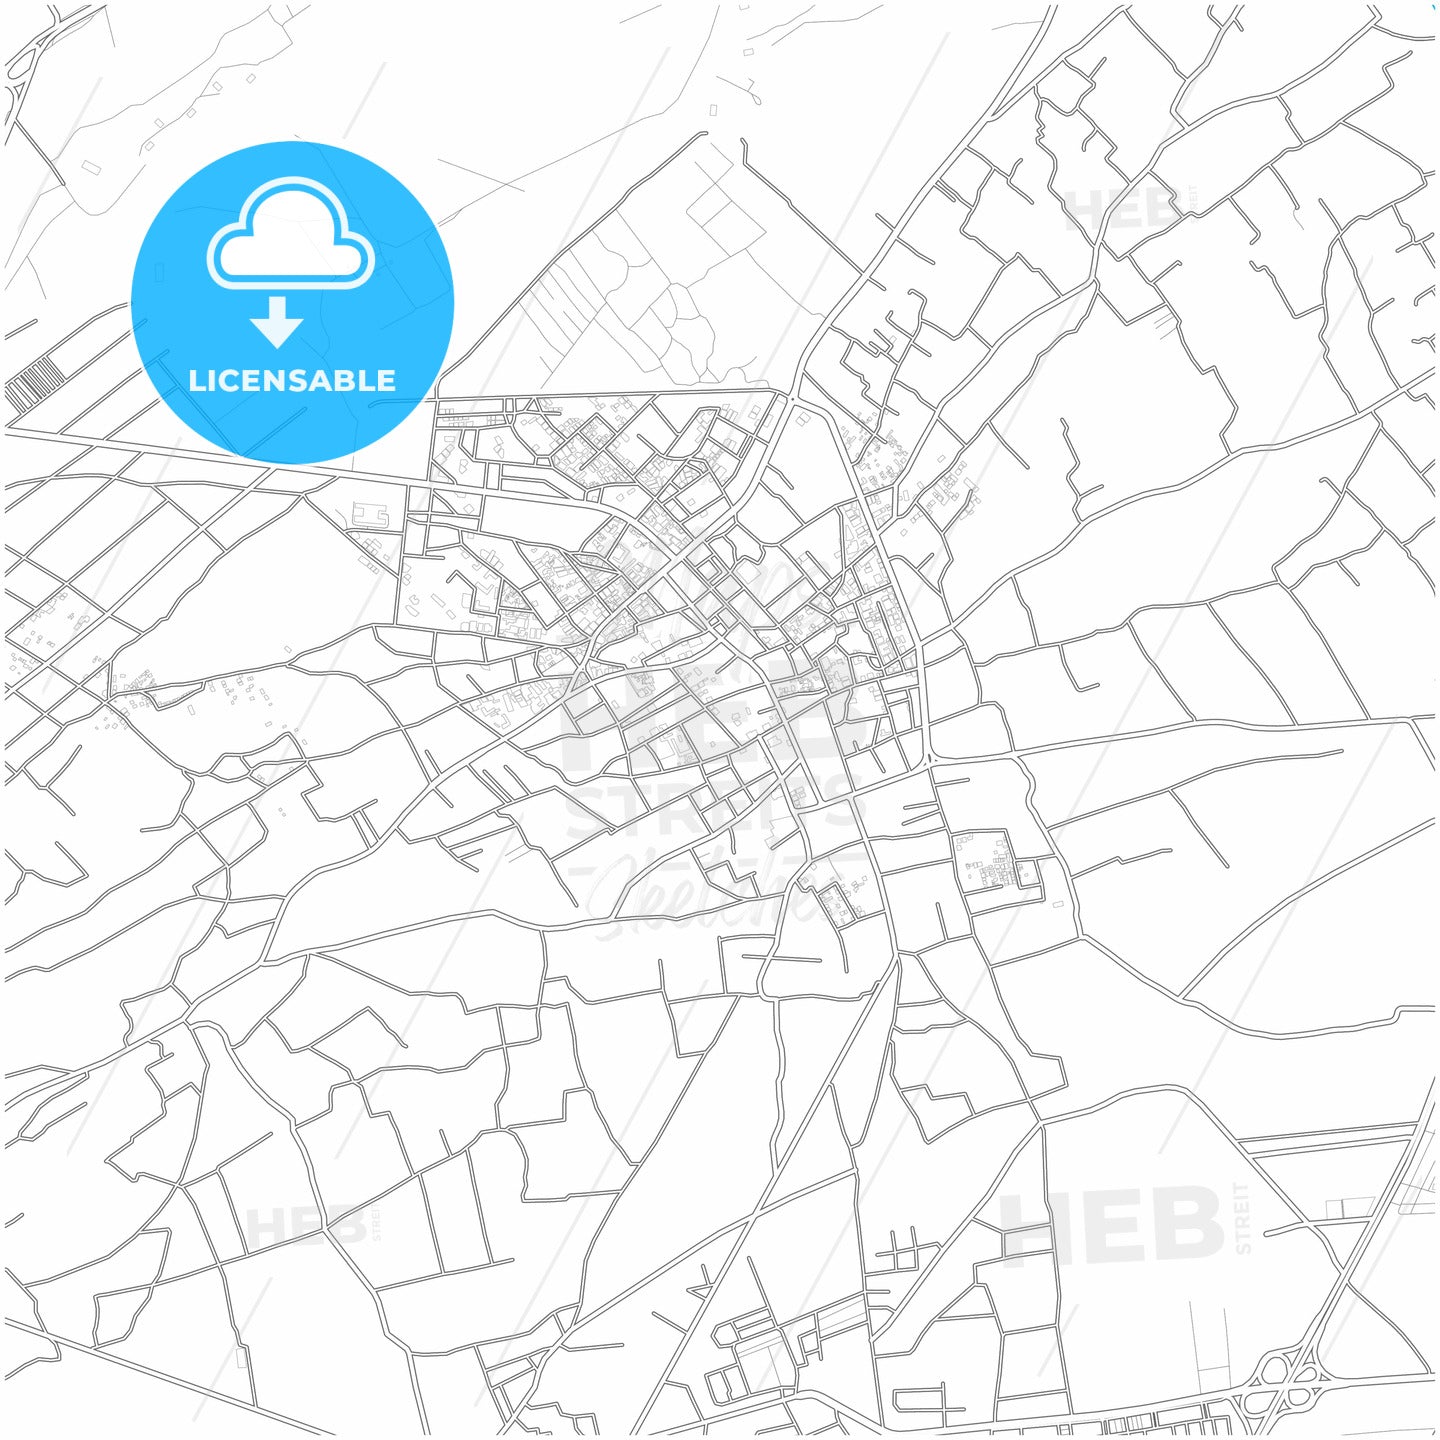 Darayya, Syria, city map with high quality roads.